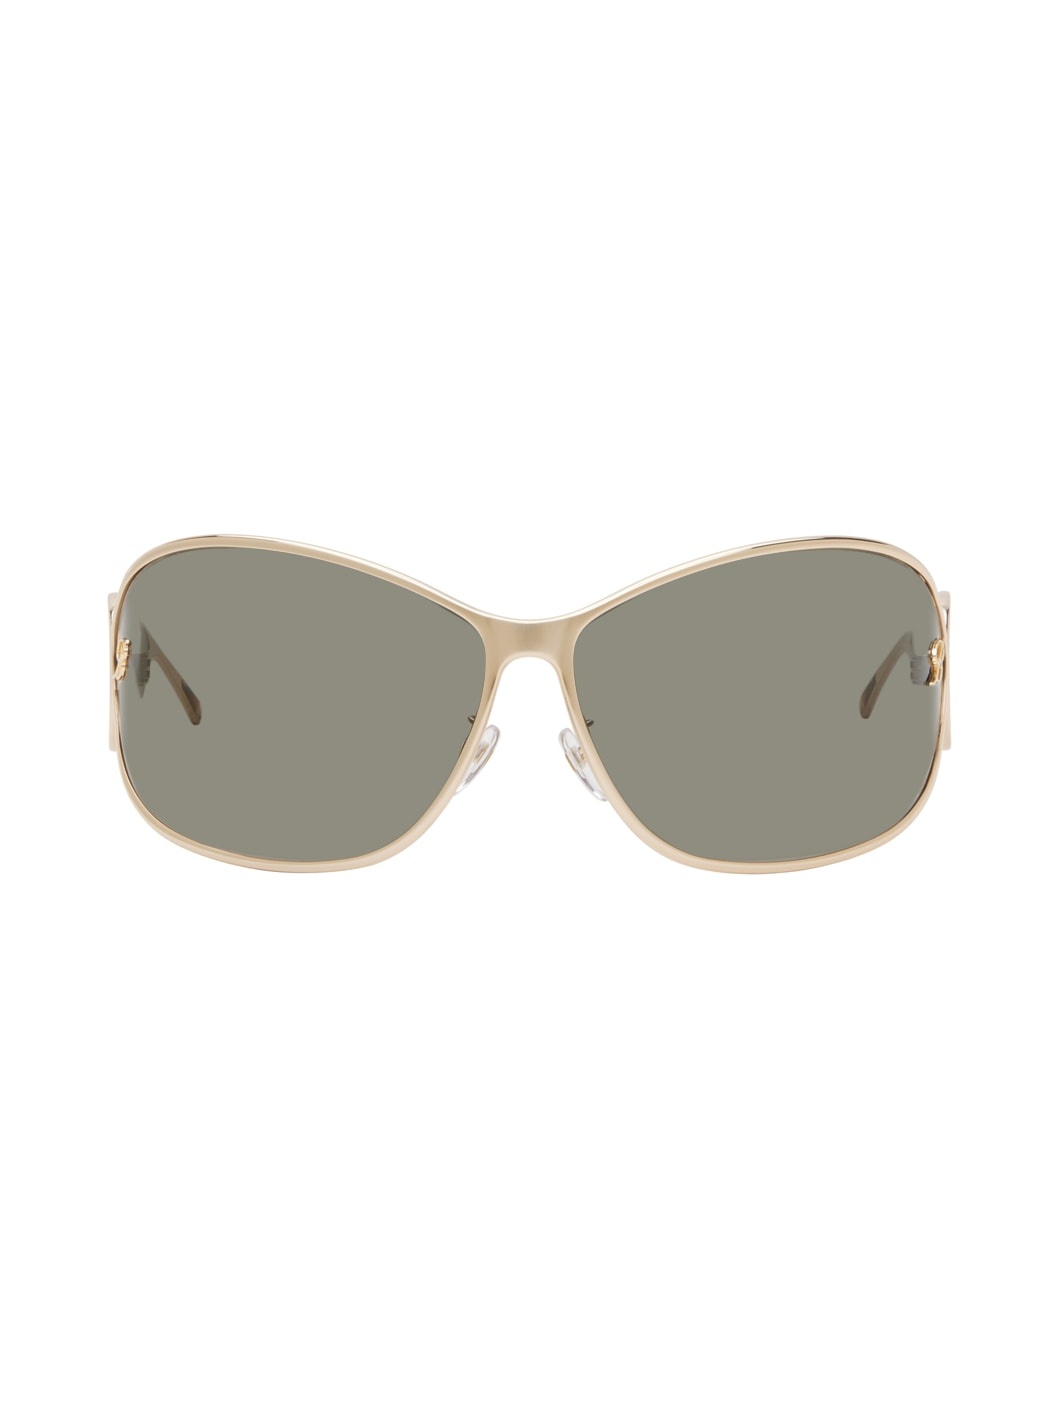 Gold Wraparound Sunglasses - 1